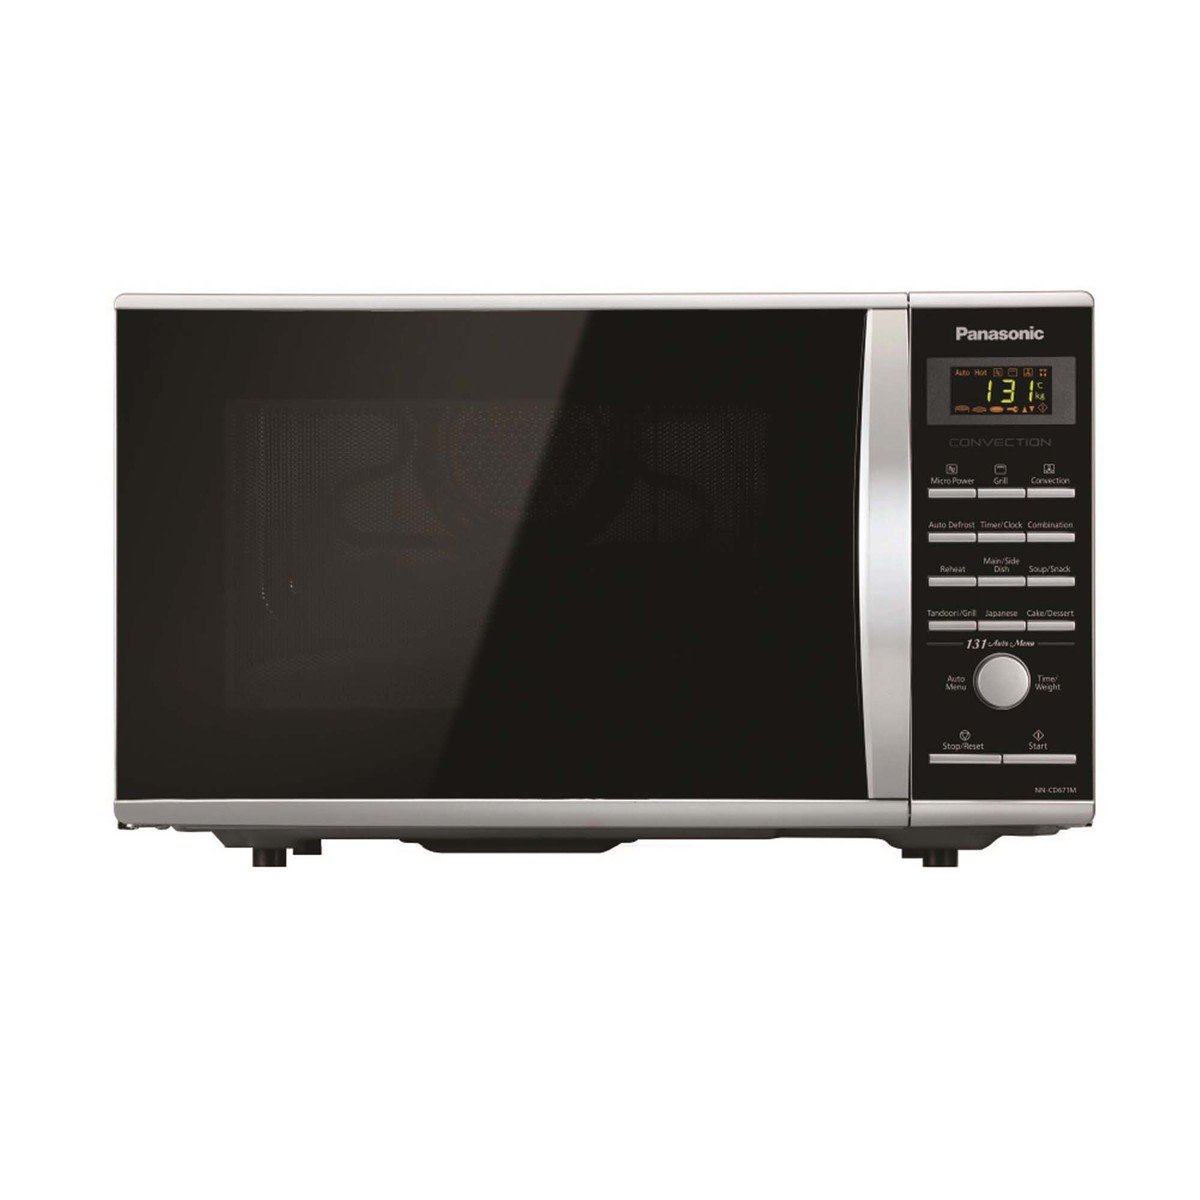 اشتري قم بشراء Panasonic Convection Microwave Oven NNCD671 27Ltr Online at Best Price من الموقع - من لولو هايبر ماركت Microwave Ovens في الكويت